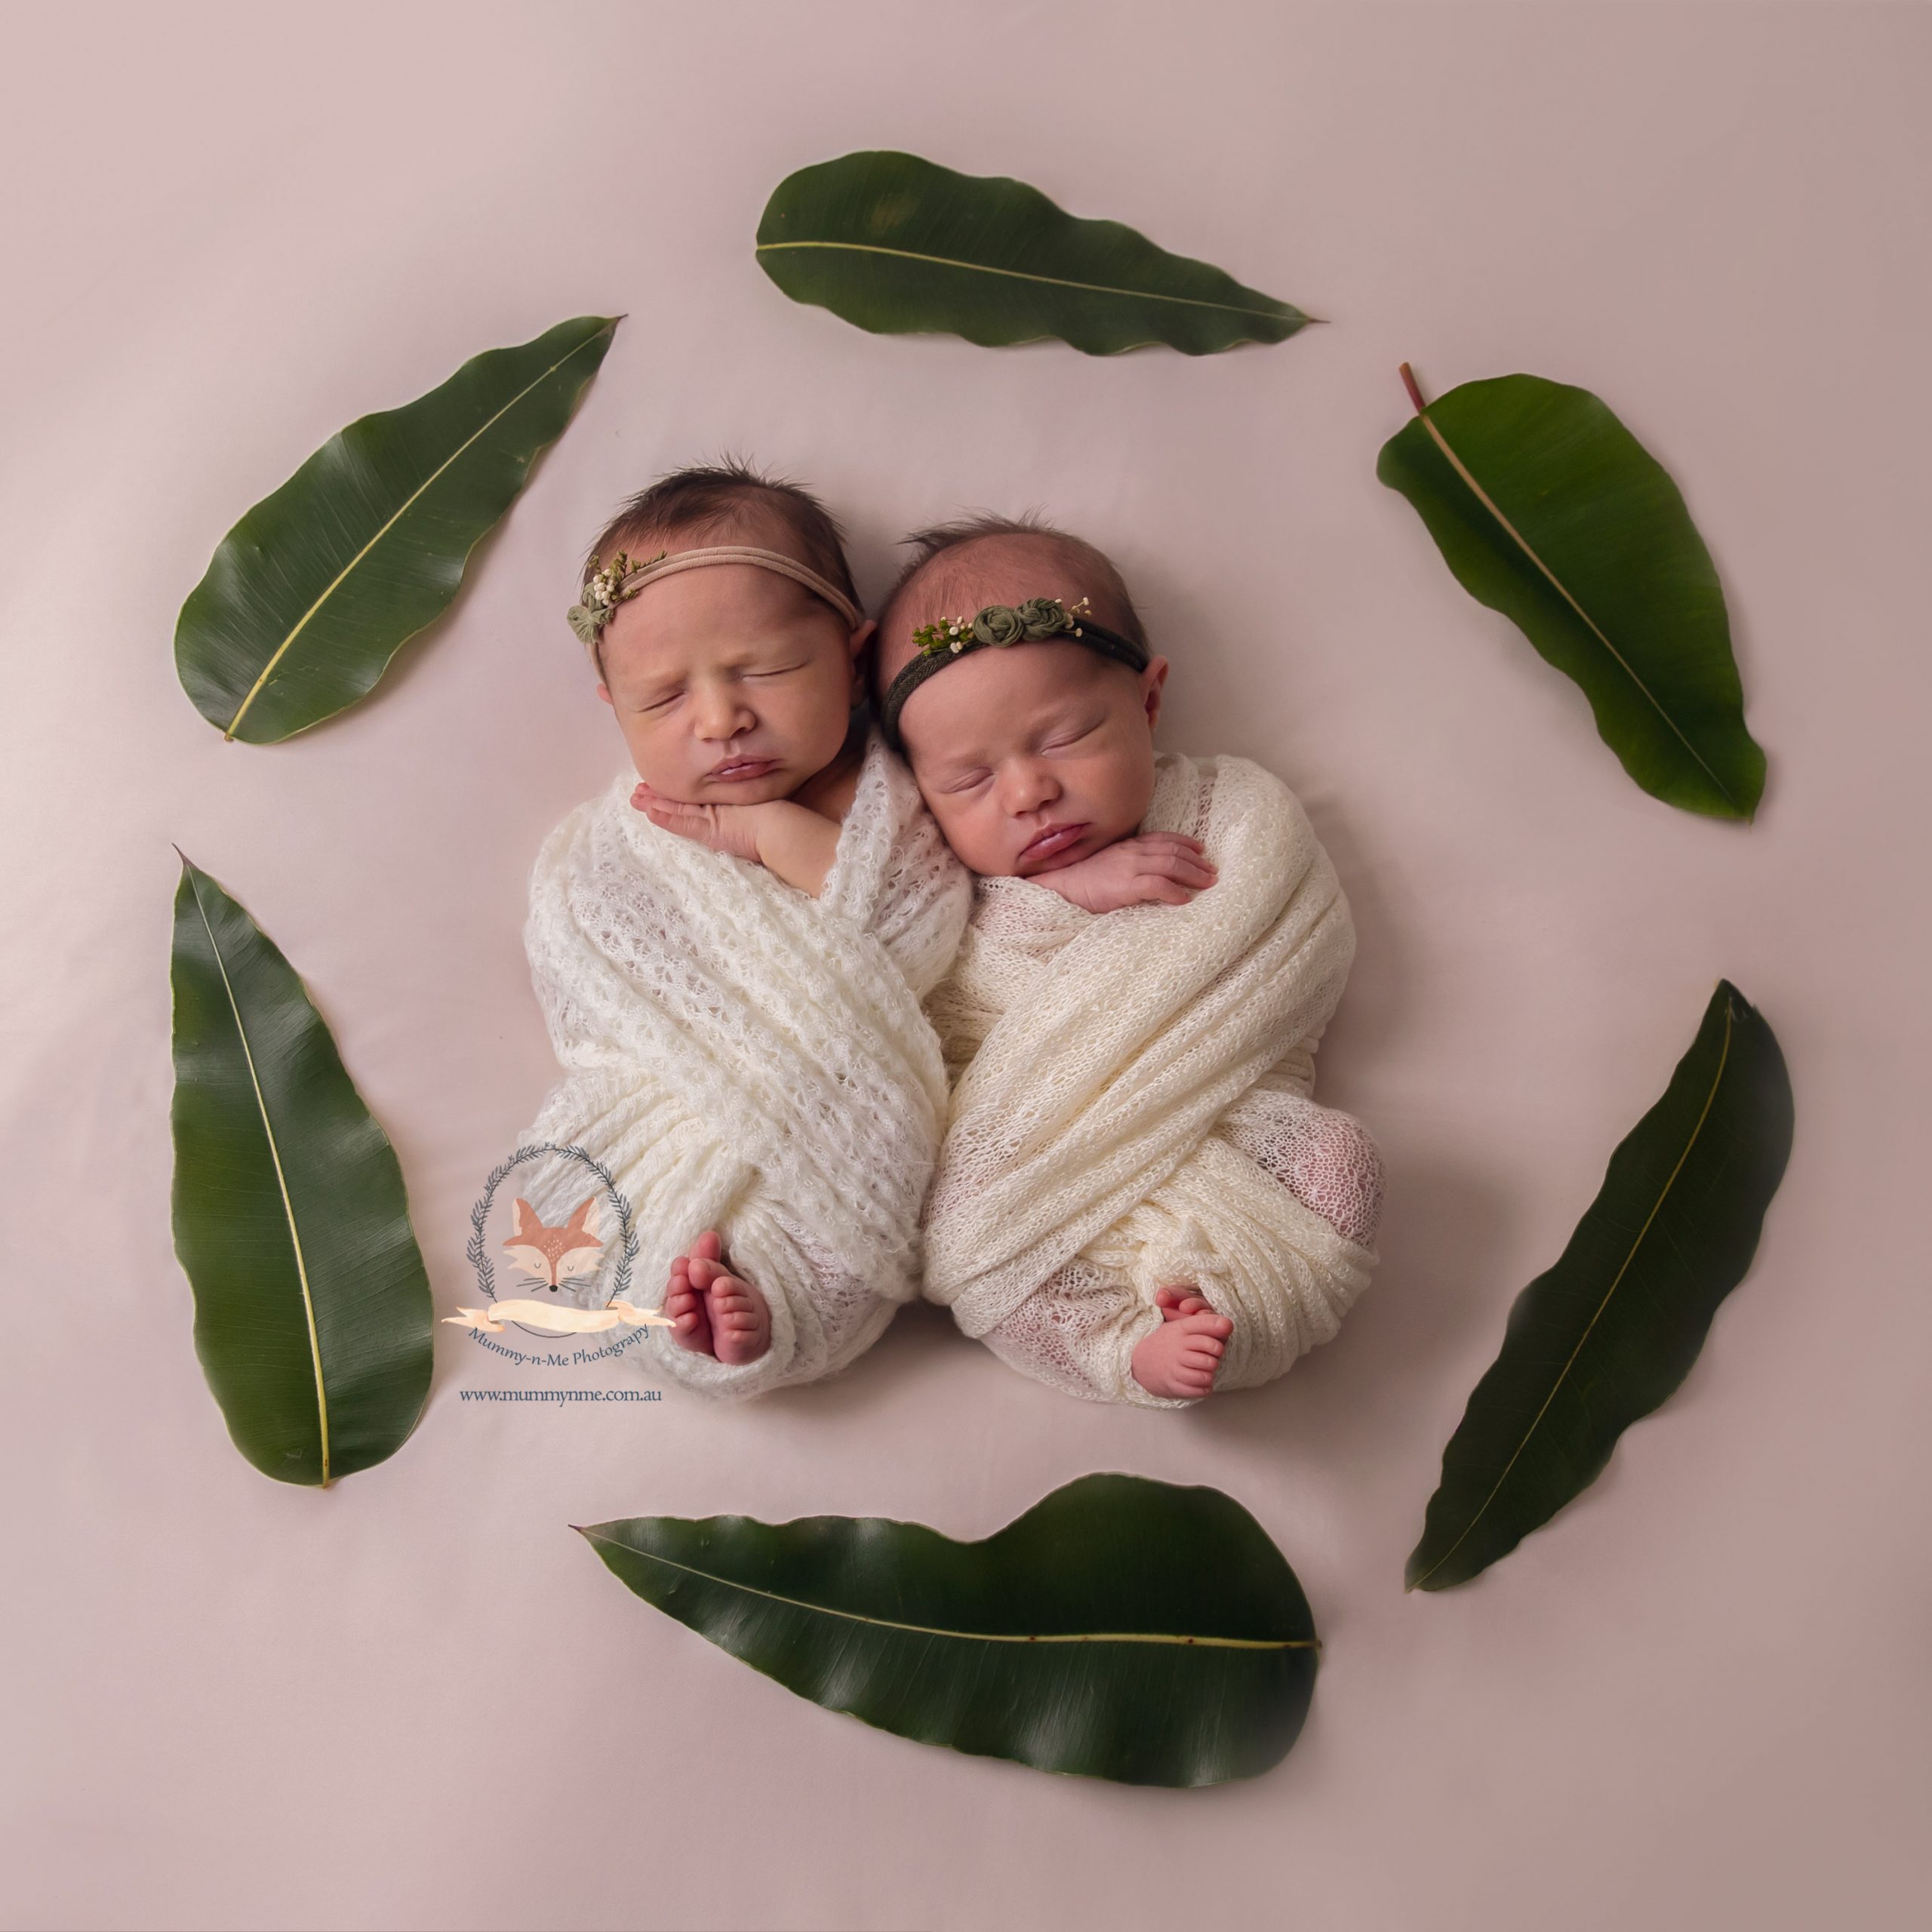 Twins Brisbane Newborn Photographer 